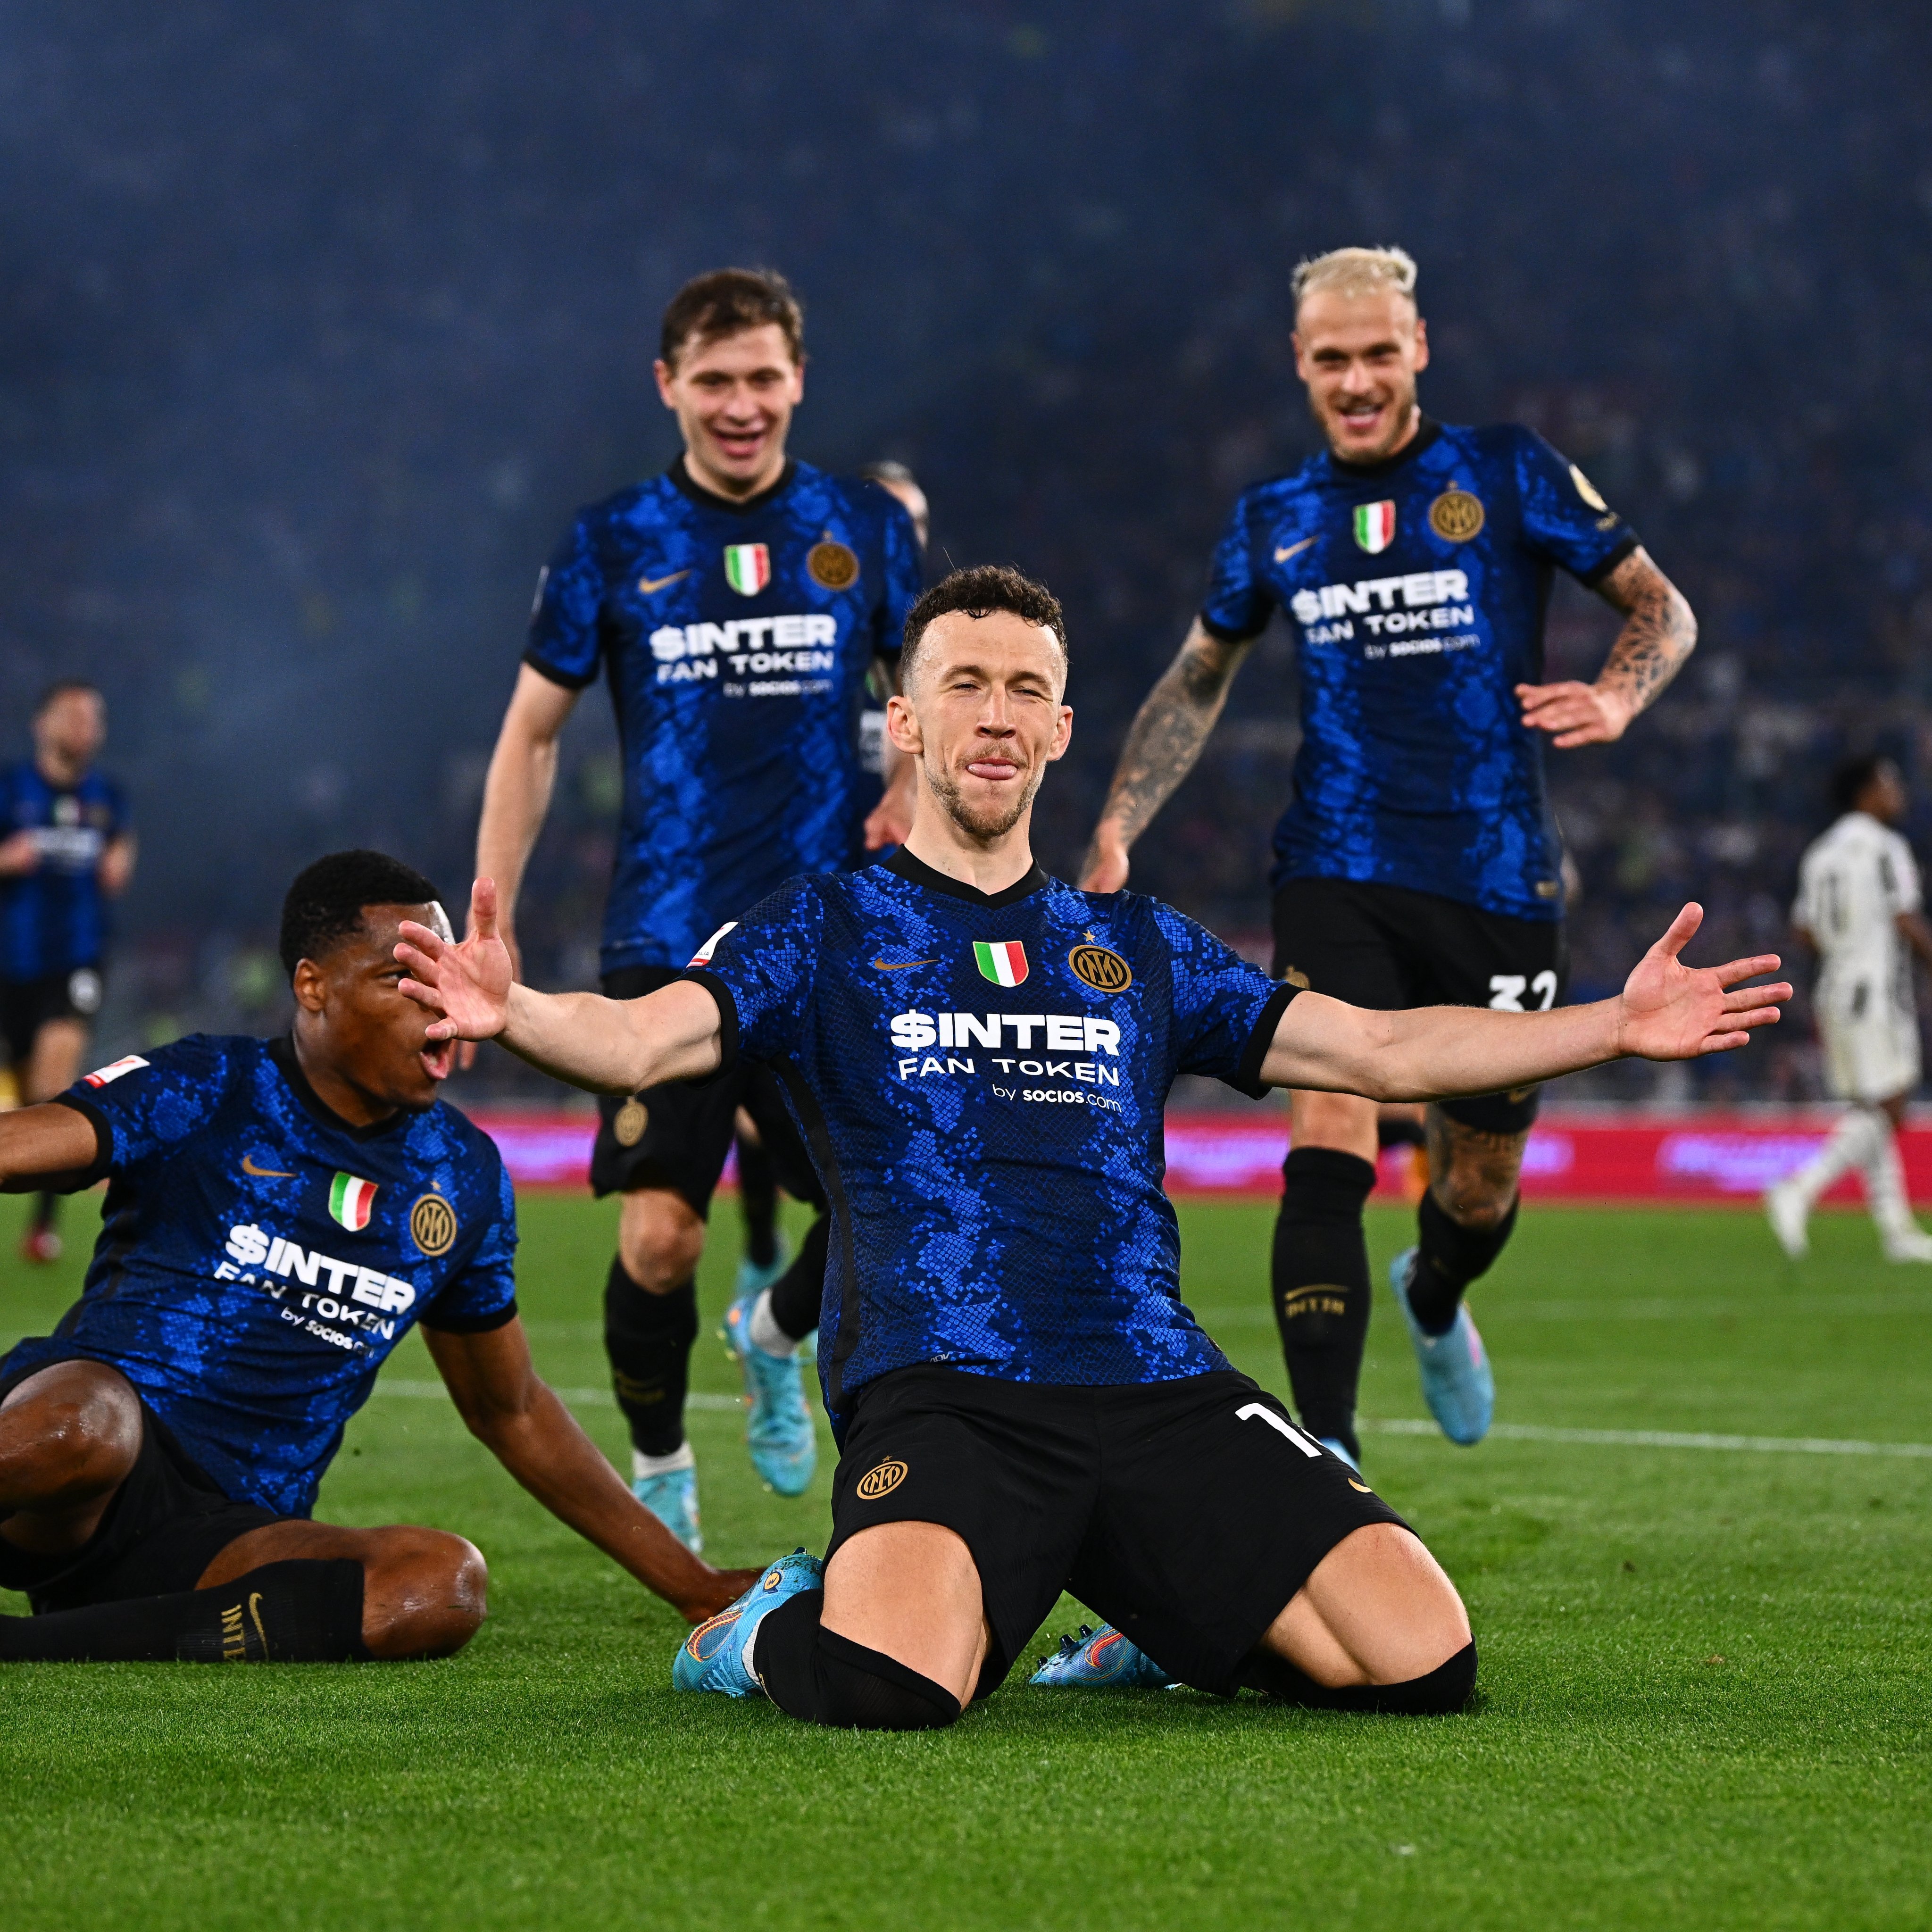 Coppa Italia Final: Inter Milan beat Juventus 4-2 to win COPPA ITALIA: Ivan Perisic scored an extra-time winner in a six-goal thriller, Watch Inter beat Juventus HIGHLIGHTS